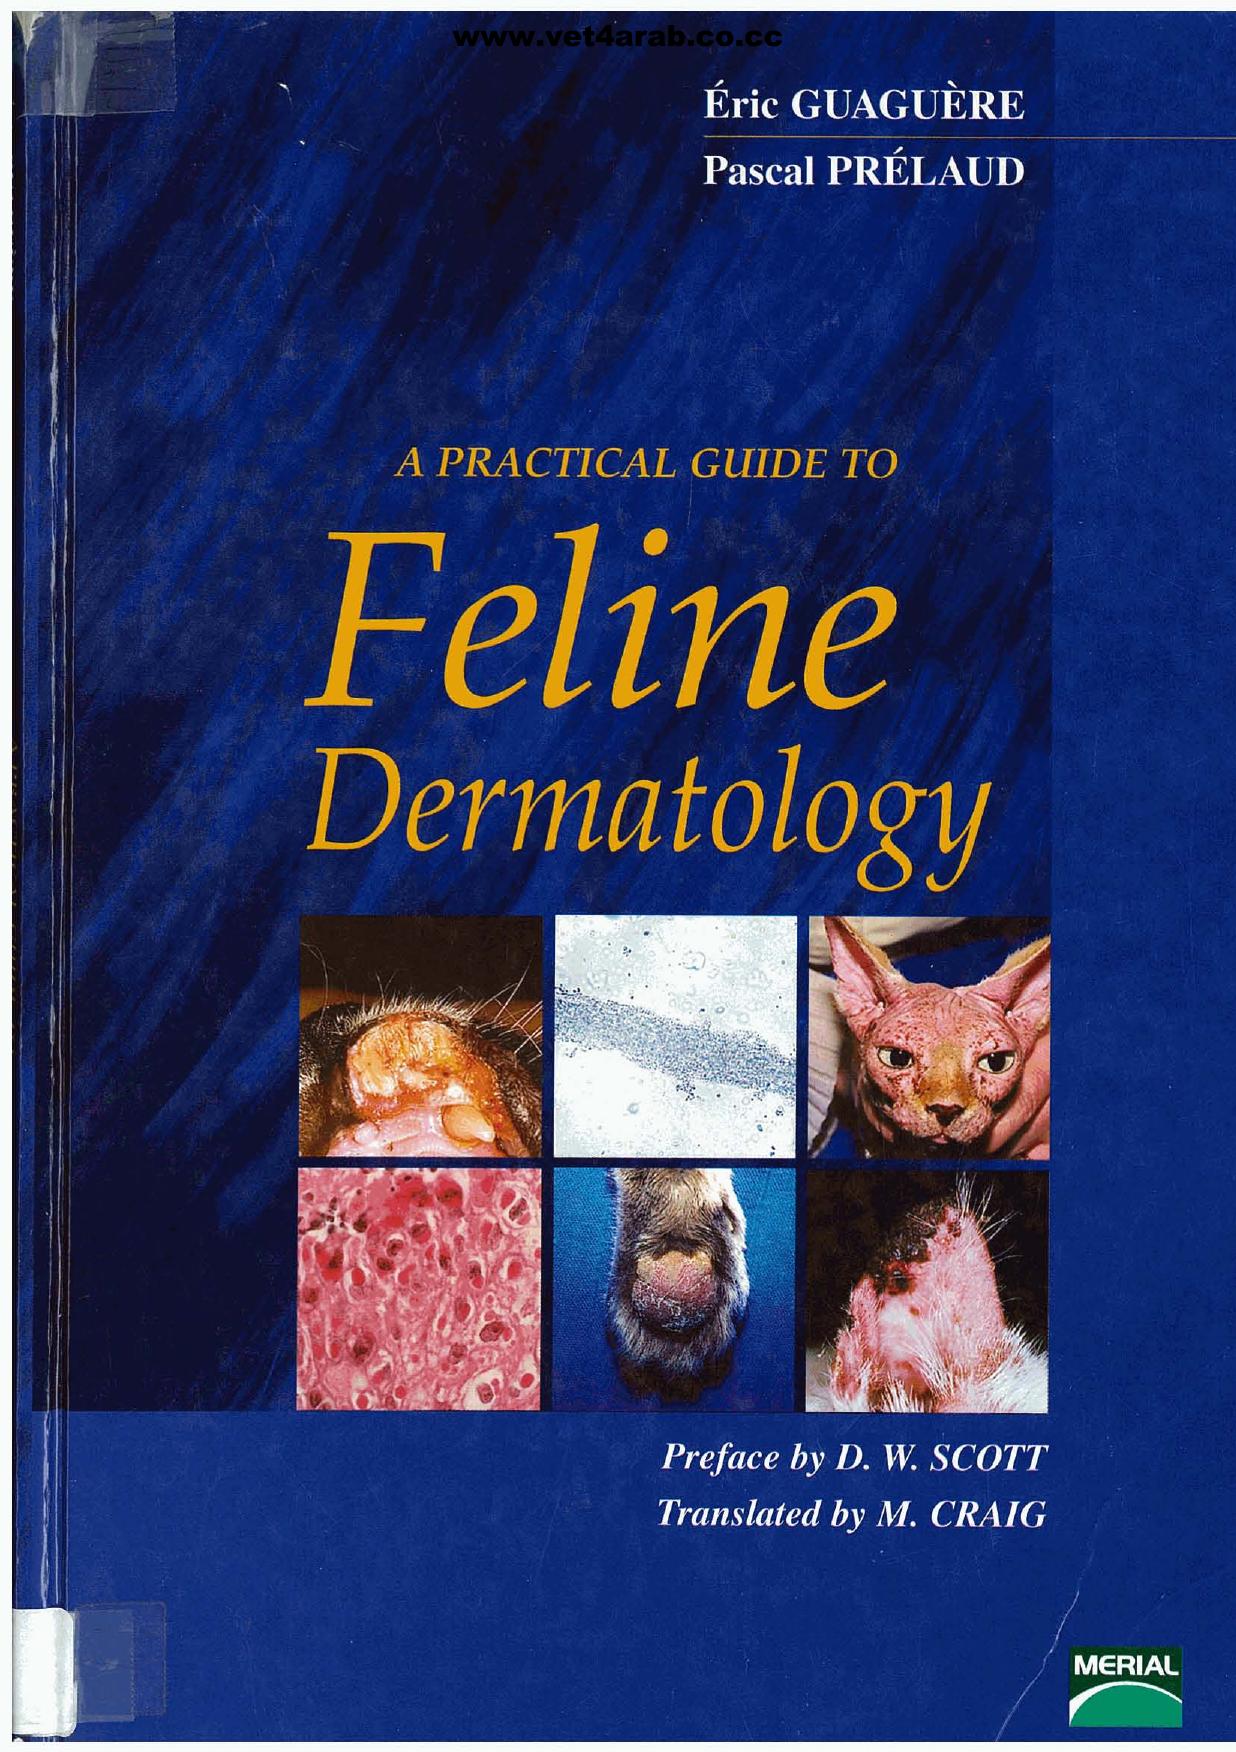 A practical guide to feline dermatology1926